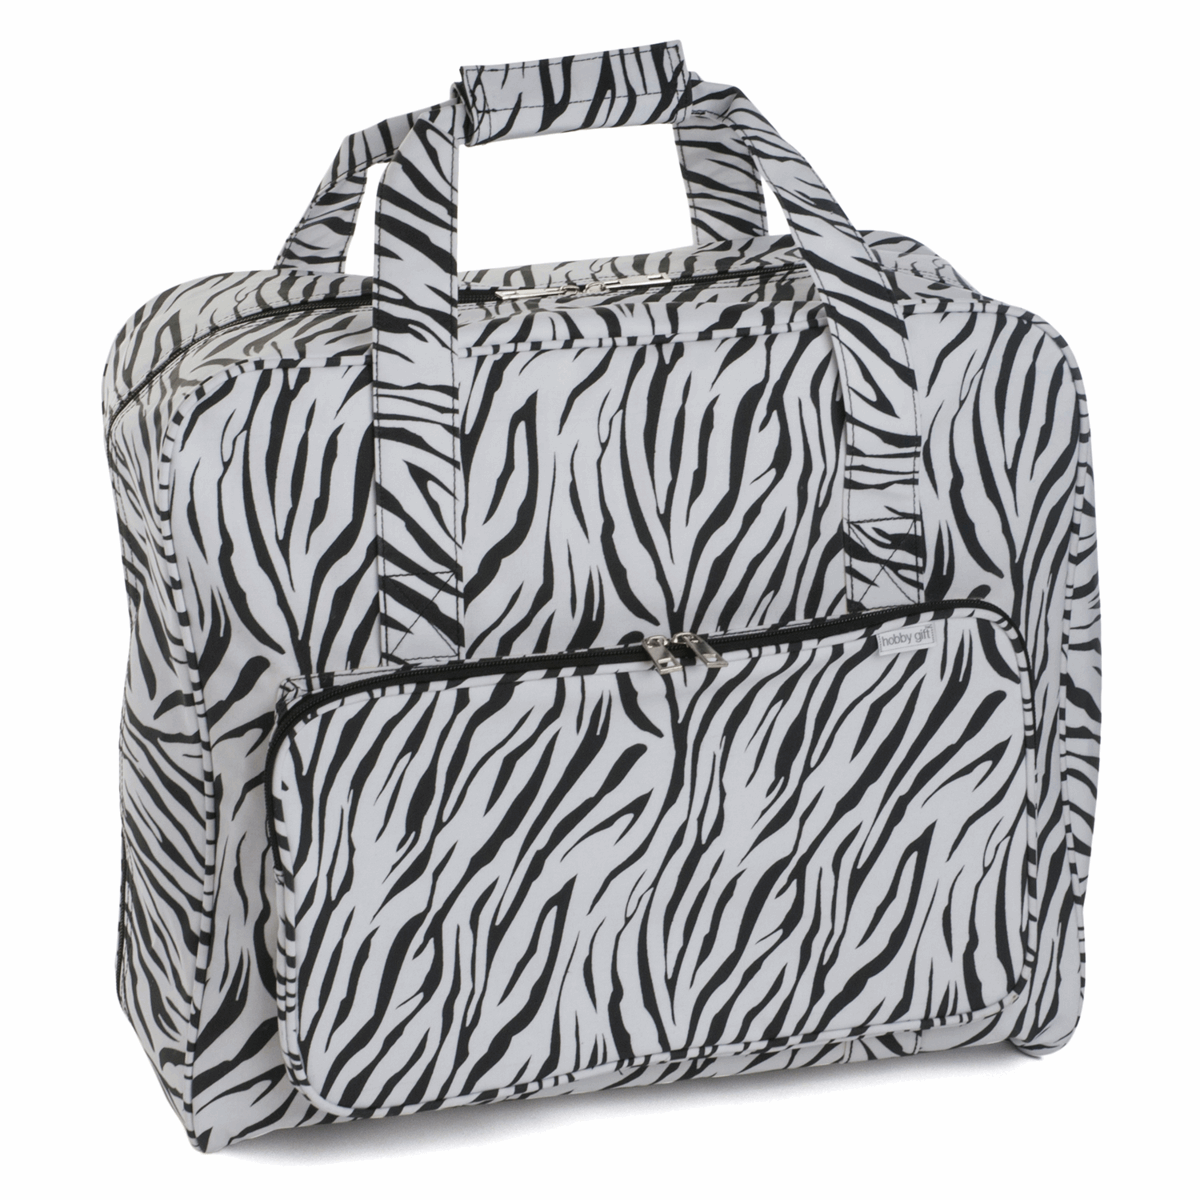 Zebra Sewing Machine Bag